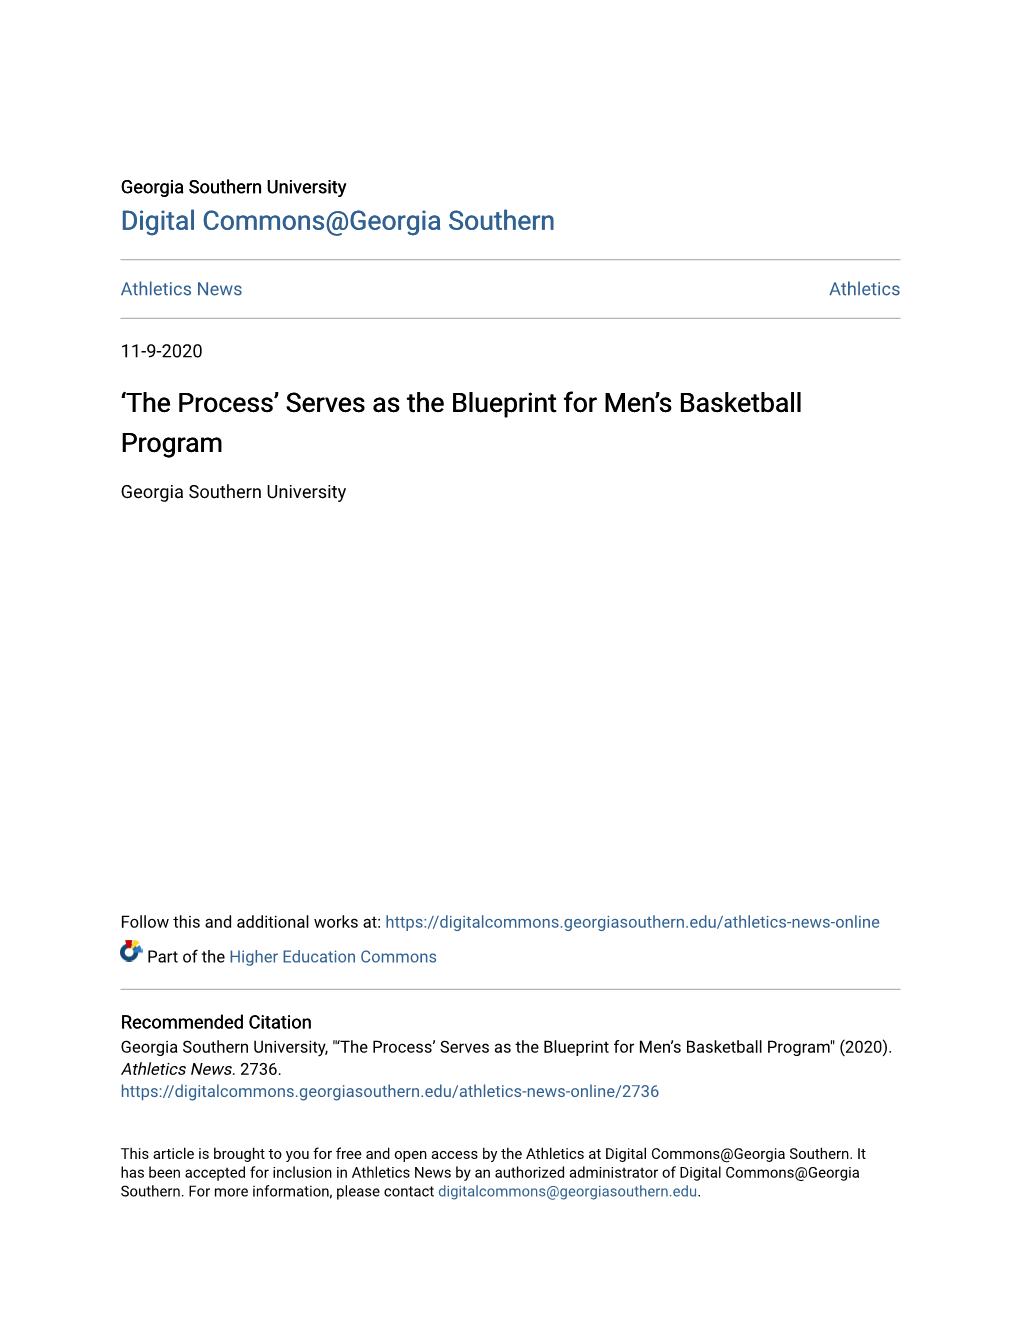 'The Process' Serves As the Blueprint for Men's Basketball Program